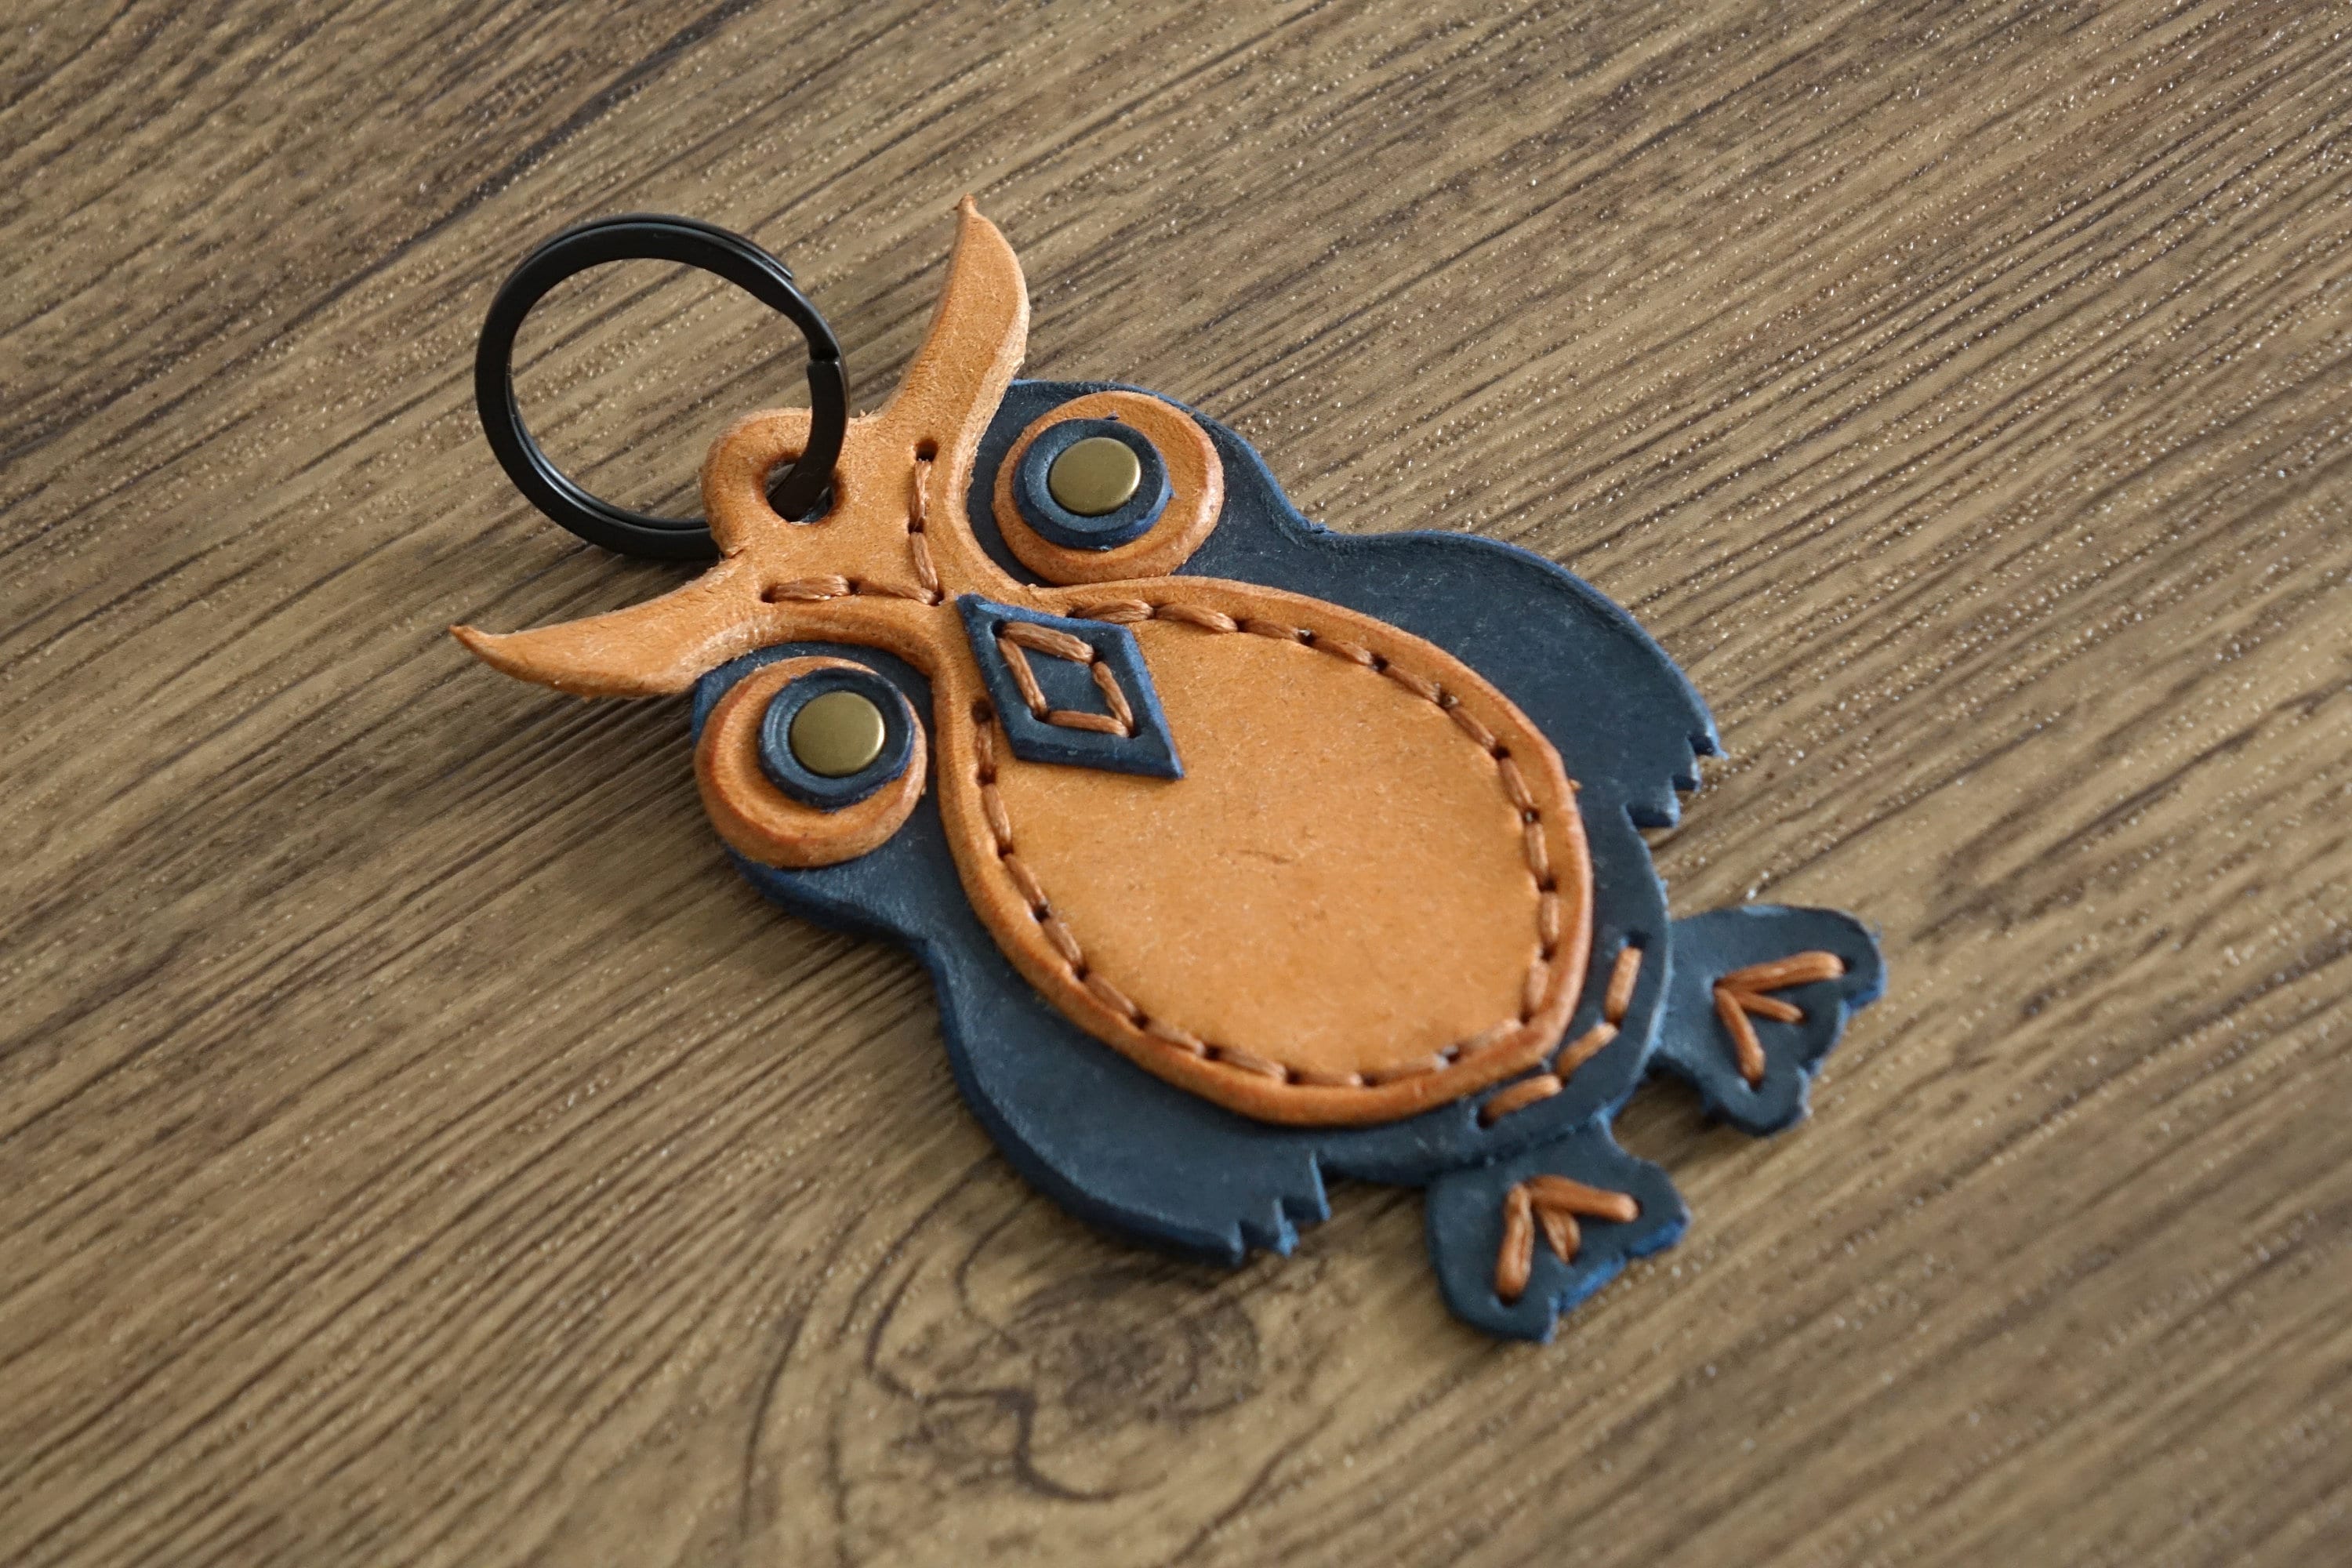 Owl chaveiro multifuncional keychain leather key chain llaveros para mujer  cute llaveros aestethic kawaii tassel earphone case